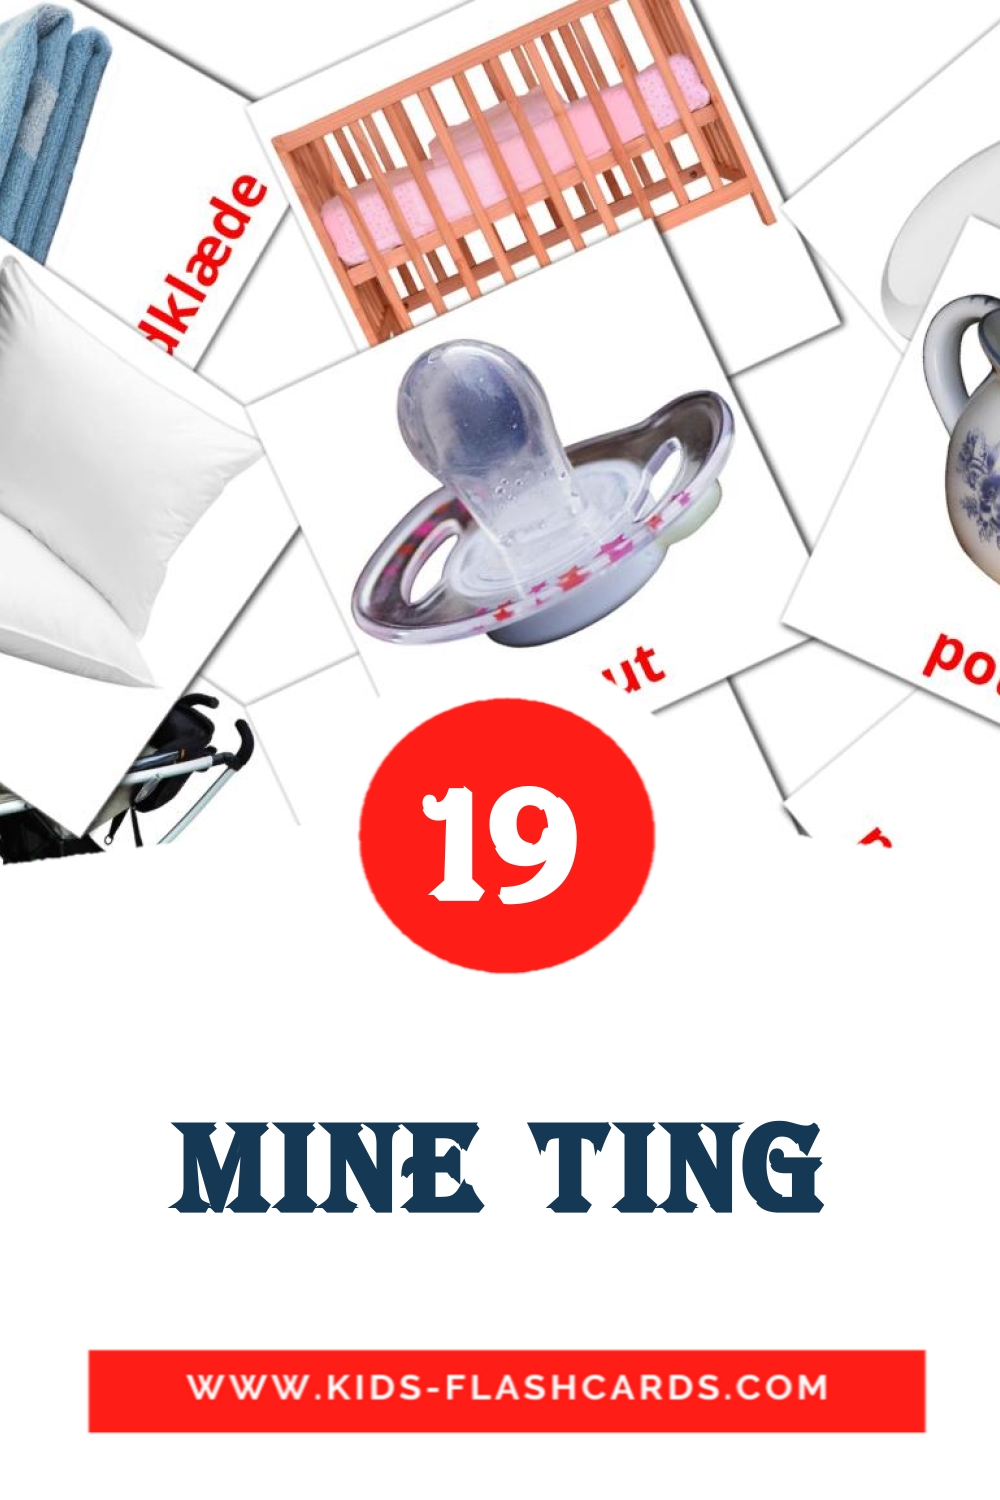 19 carte illustrate di Mine ting per la scuola materna in dansk